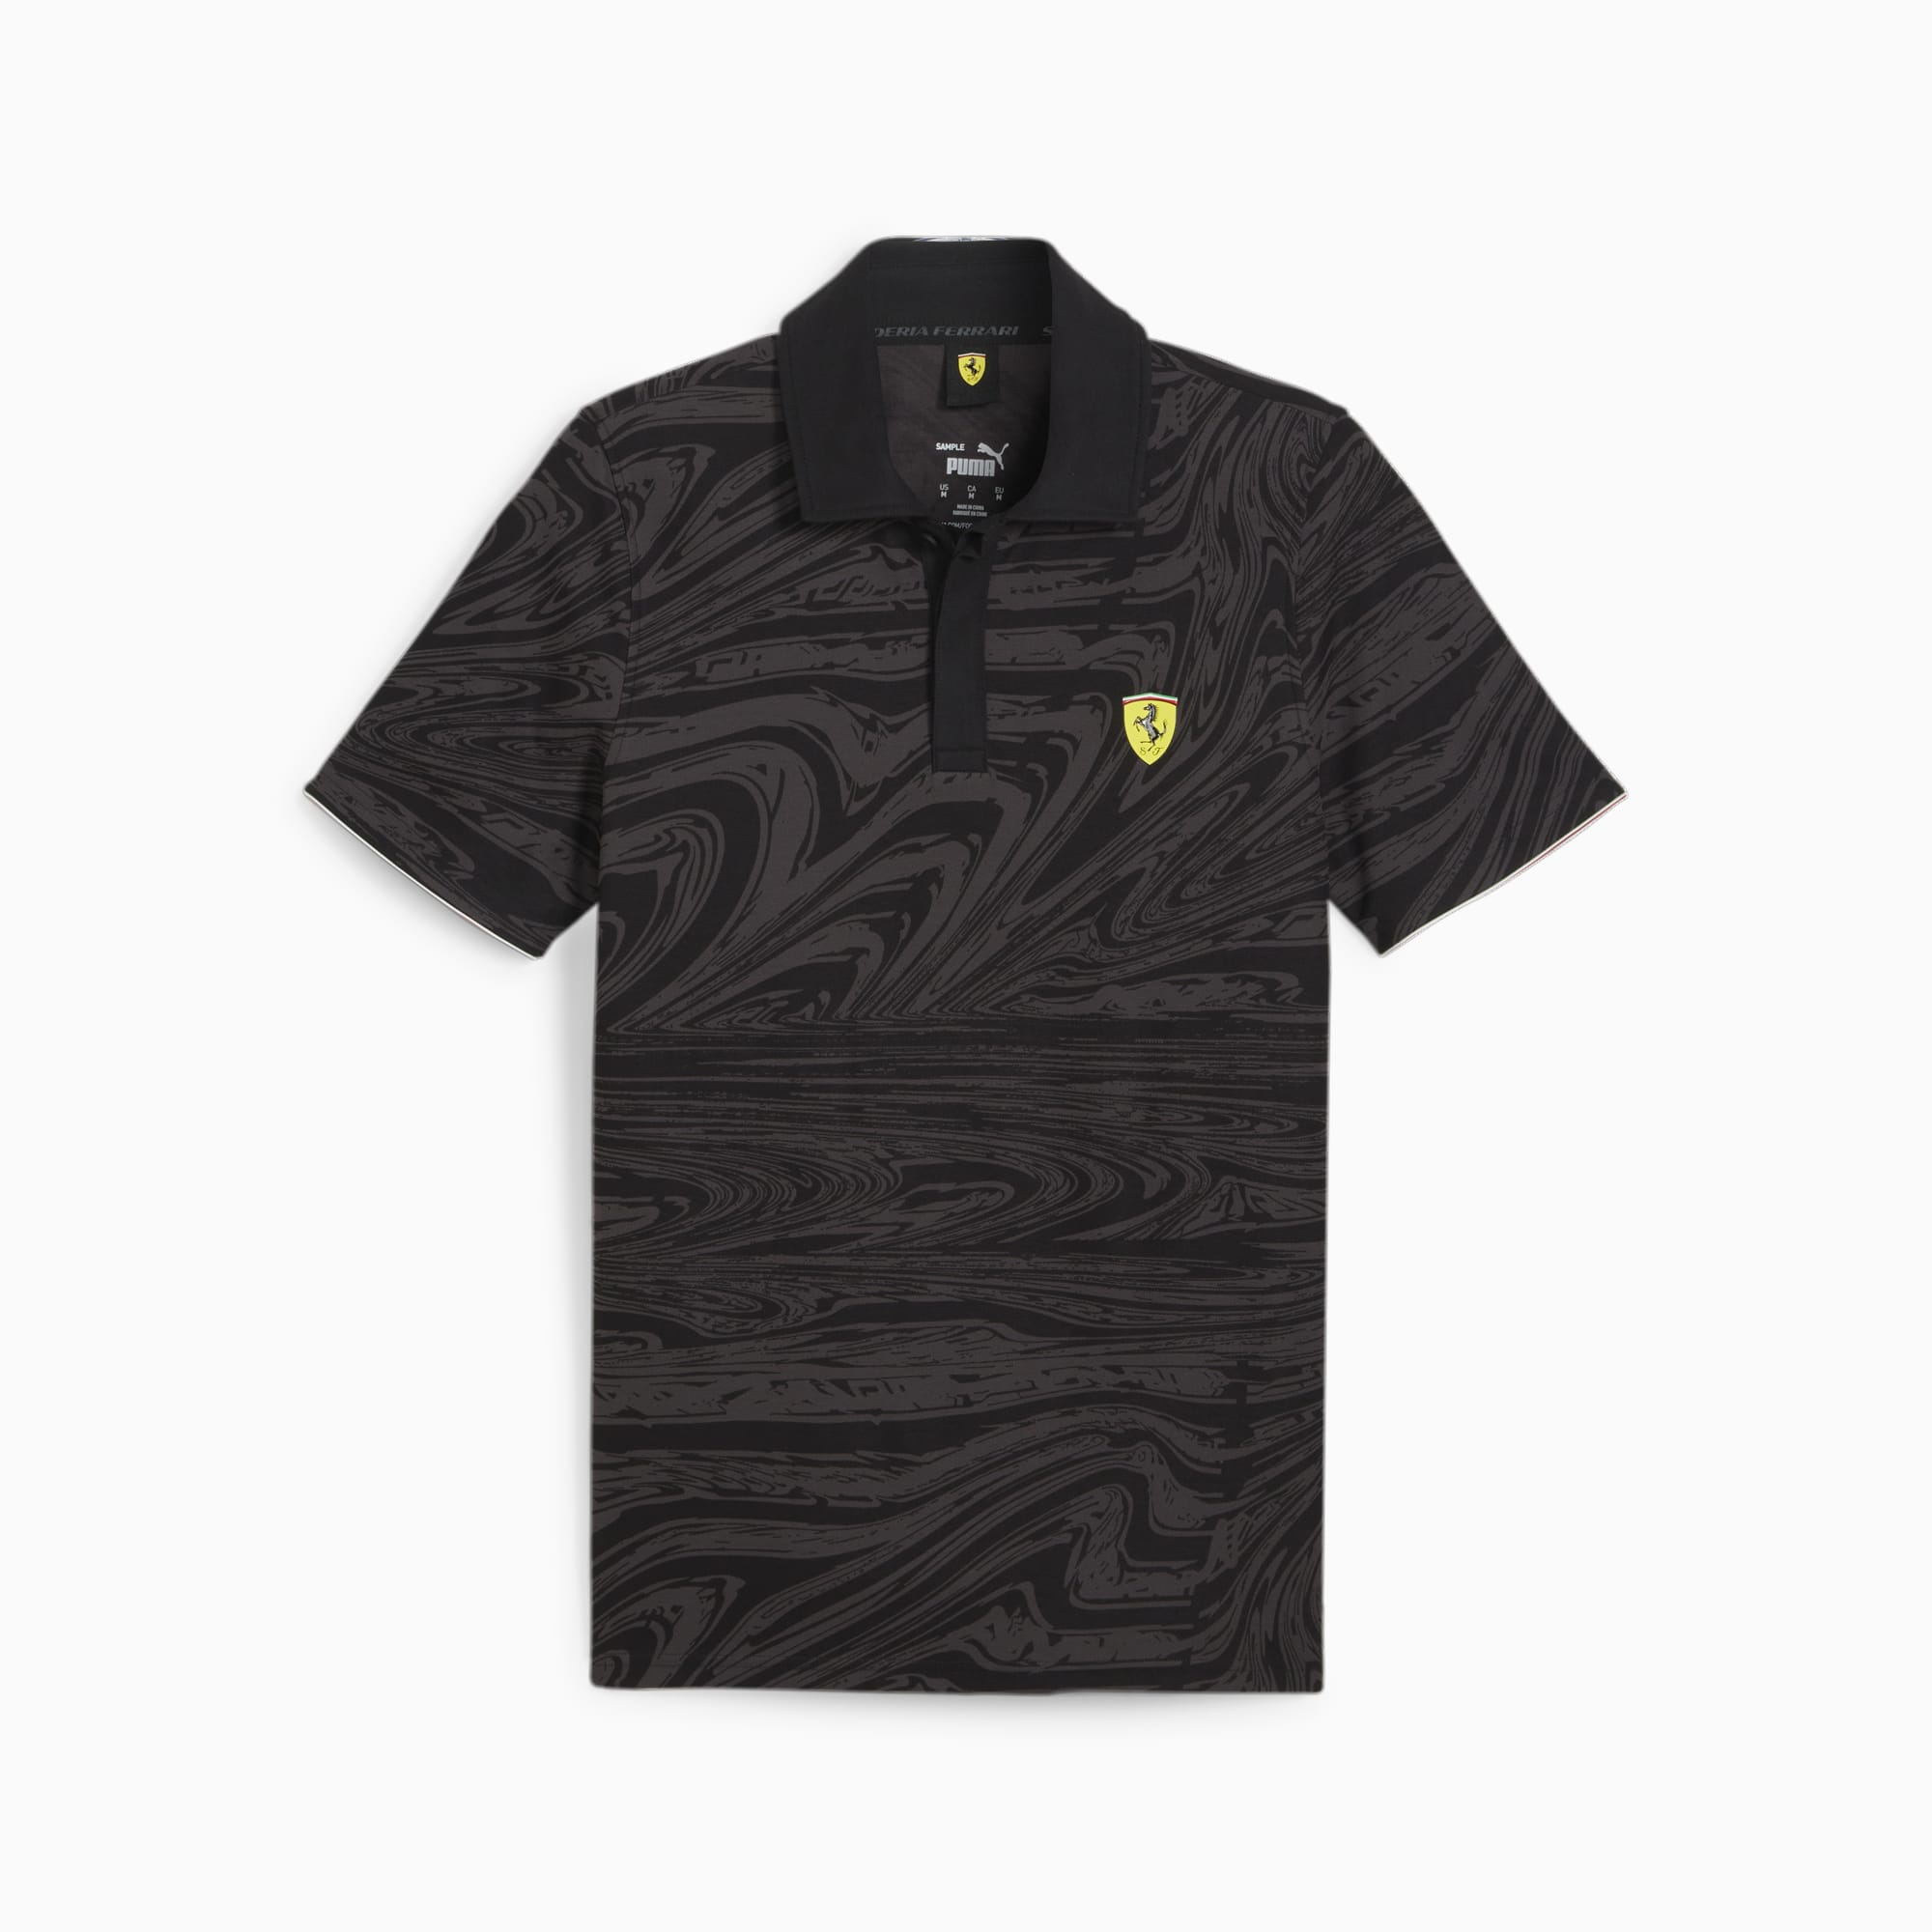 PUMA Scuderia Ferrari Race Men's Motorsport Graphic Polo Shirt, Black, Size XS, Clothing